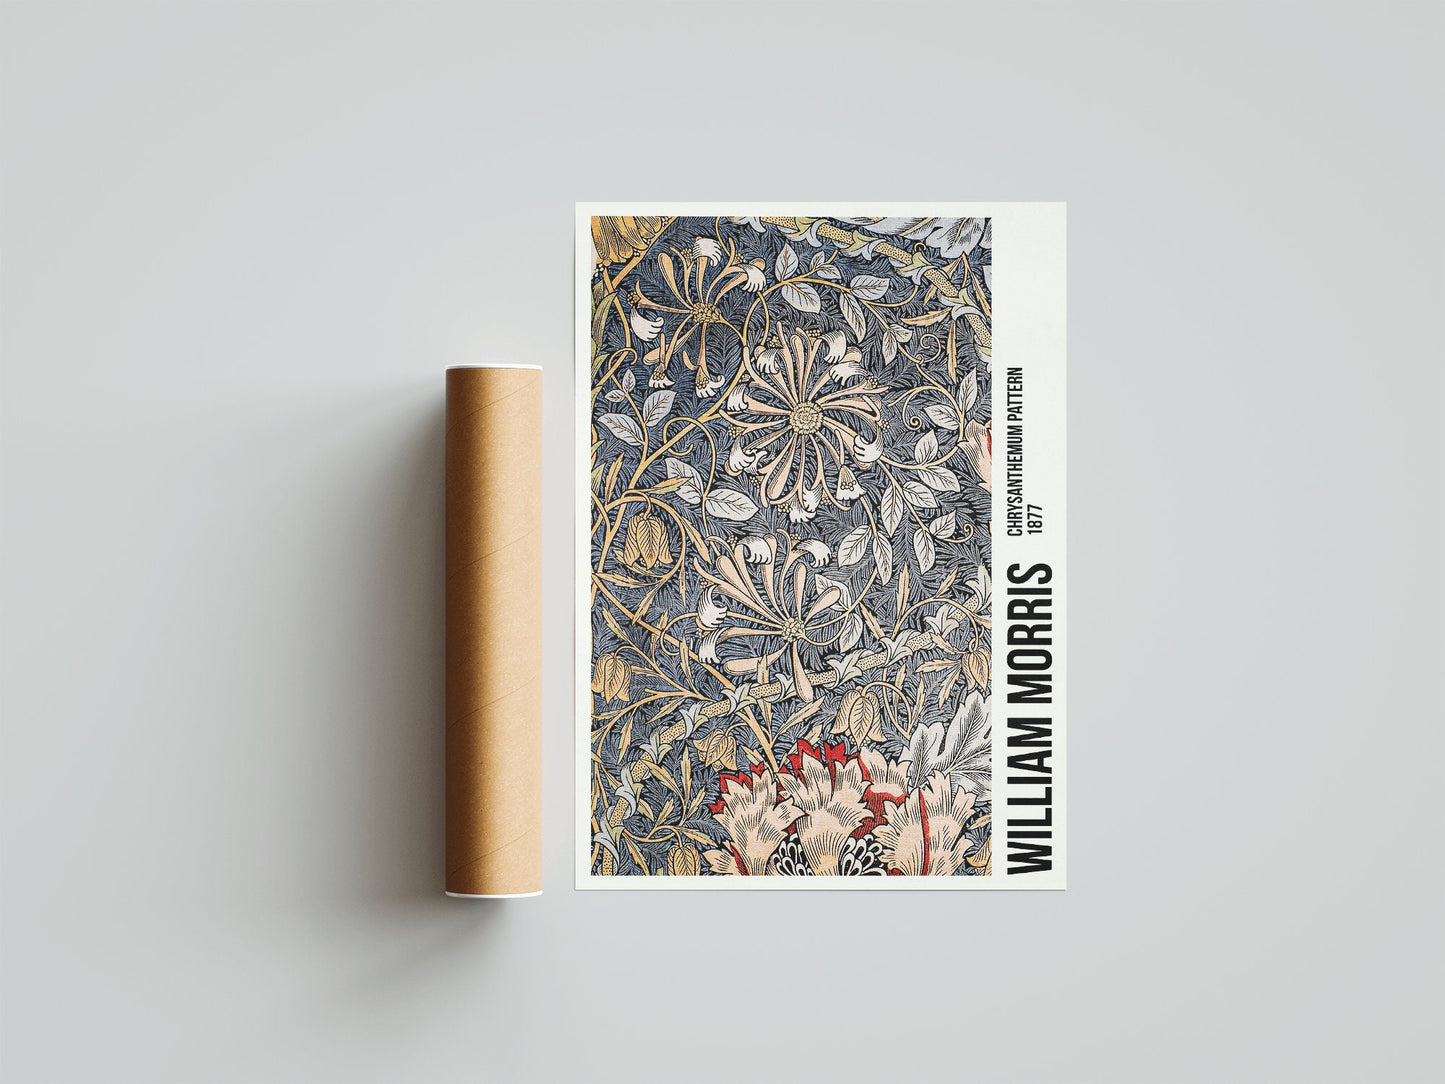 William Morris Exhibition Poster, William Morris Print, Art Nouveau, Honeysuckle Pattern, Fabric Textured Background, Victorian, Home Decor